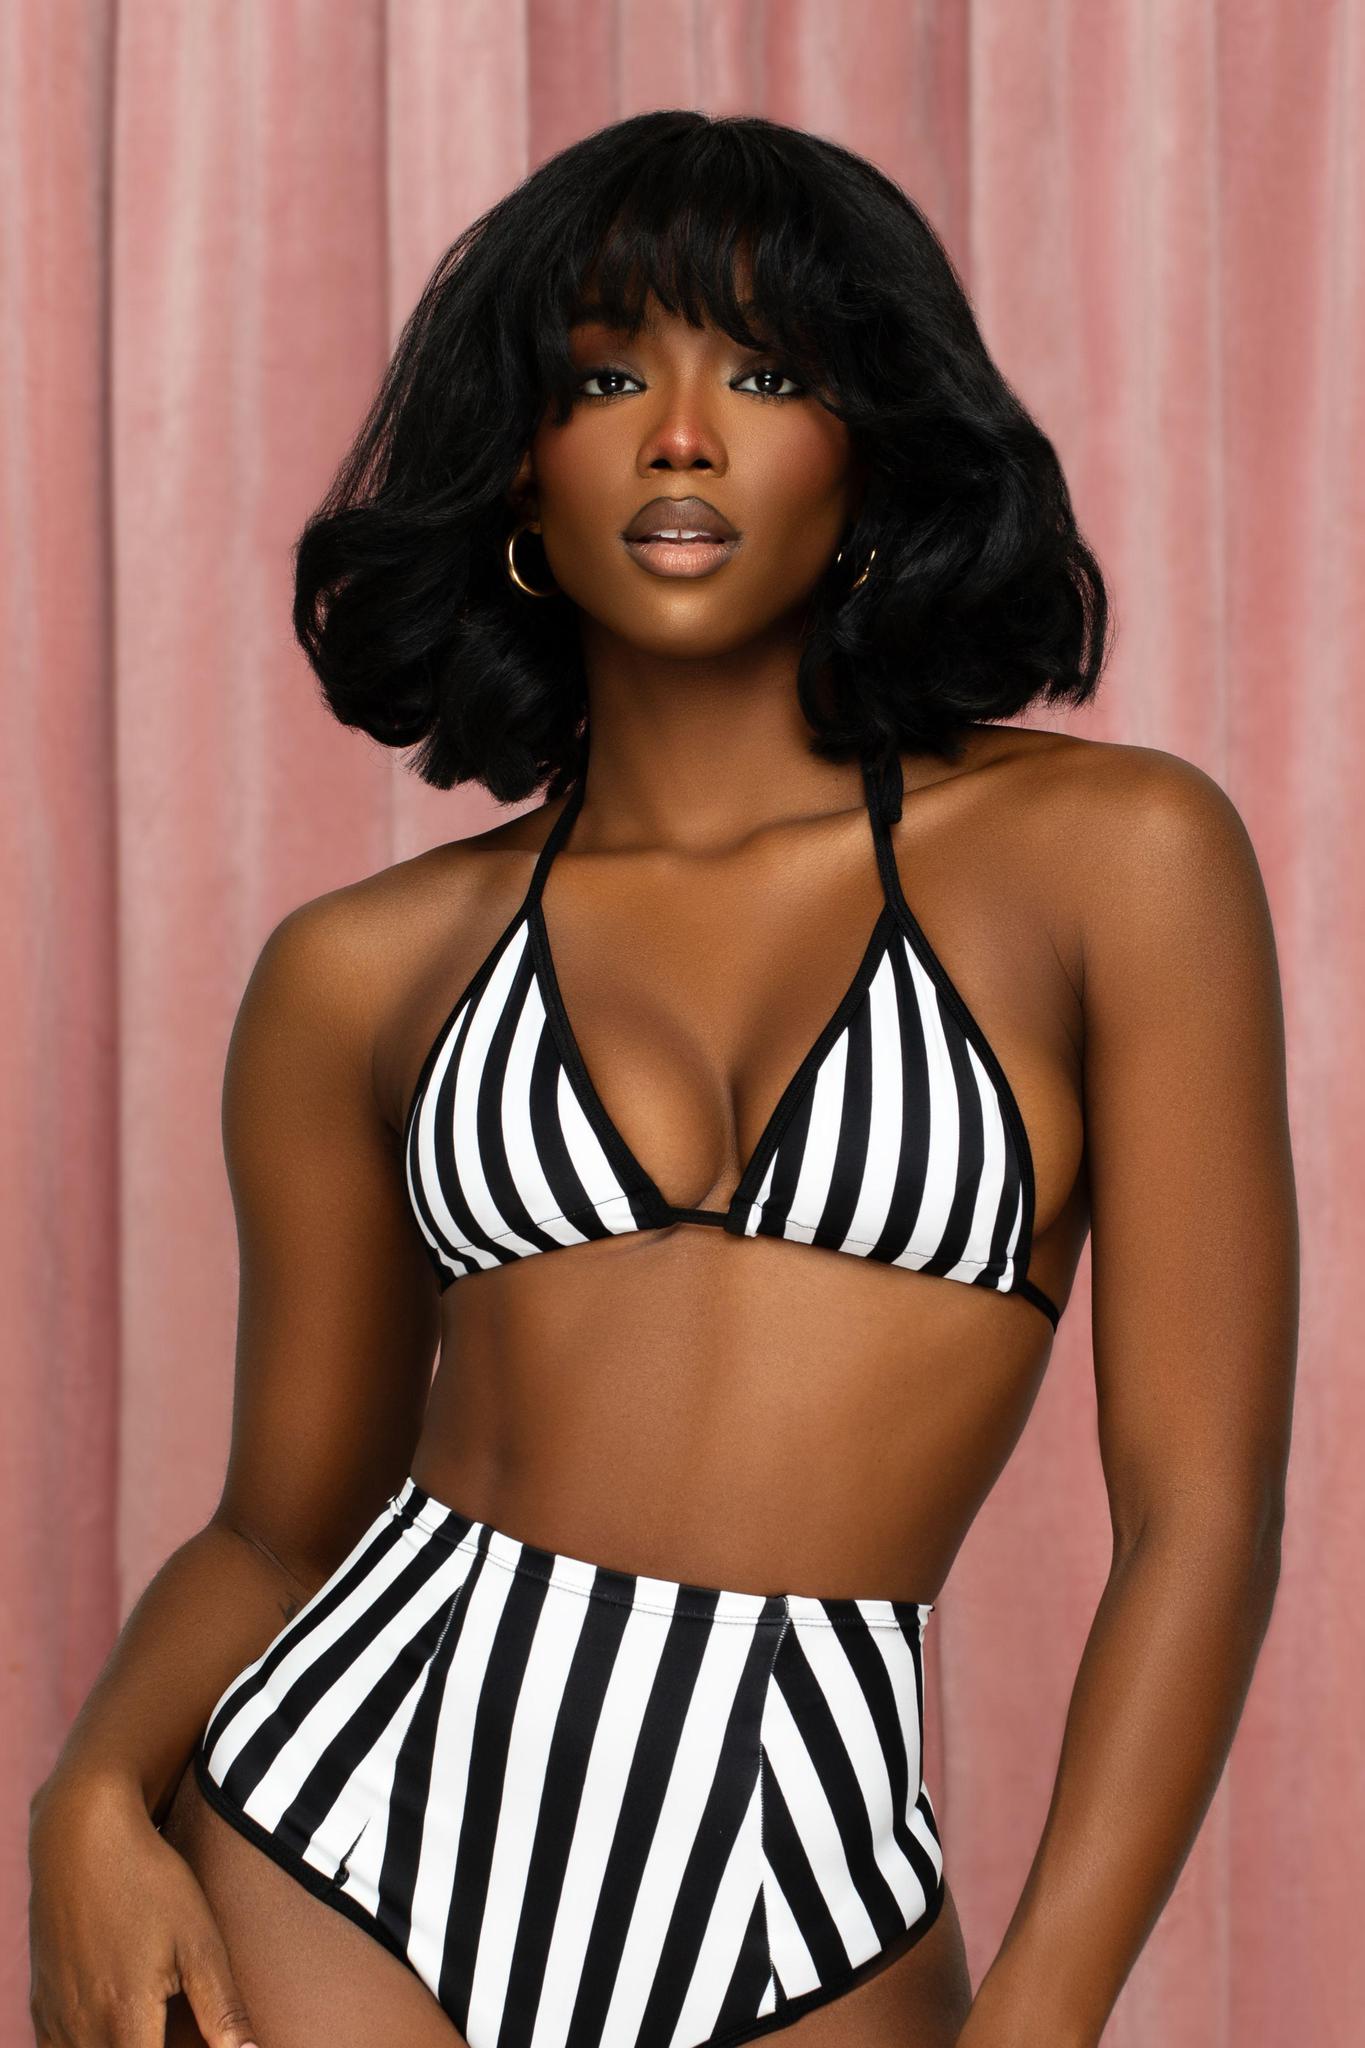 a woman in a black and white striped bikini